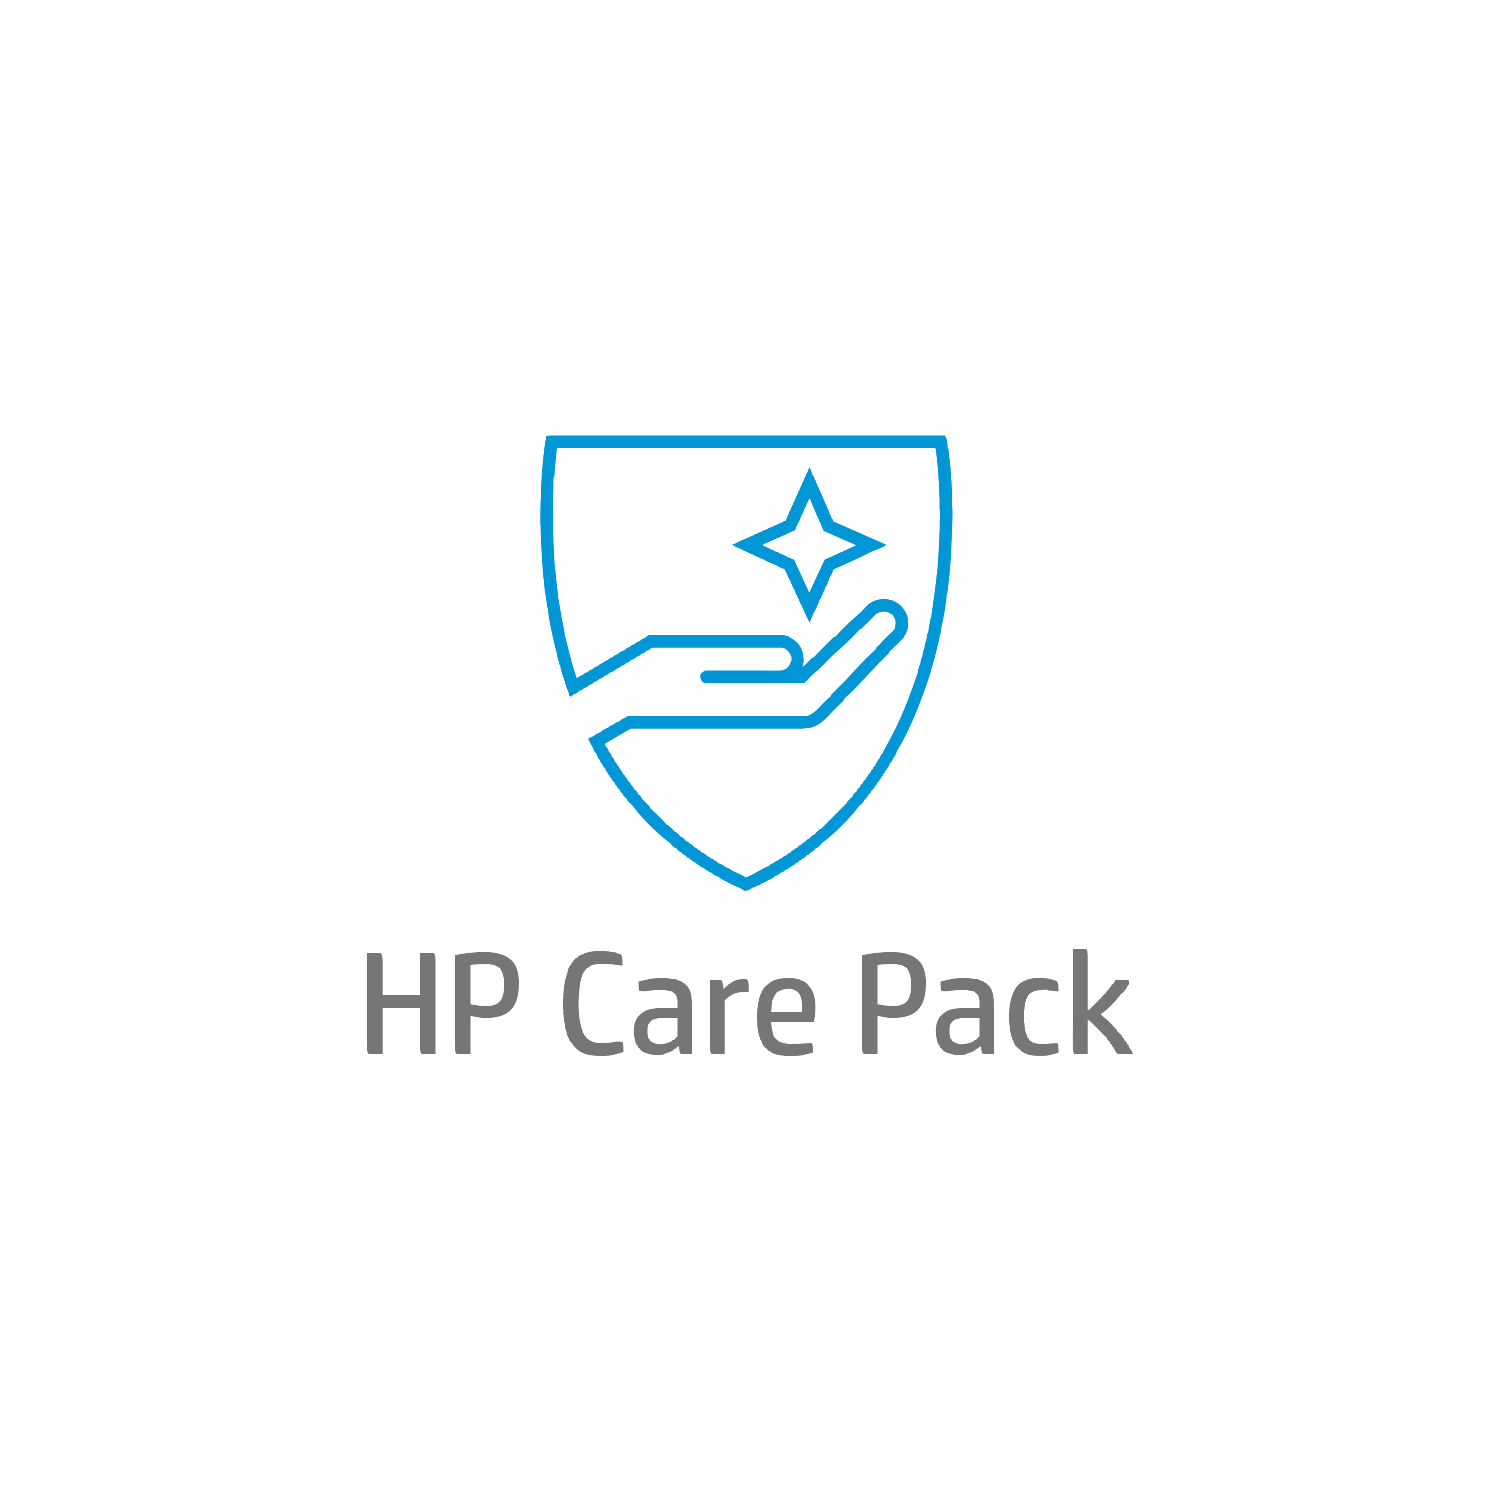 Bild von HP Electronic HP Care Pack Next business day Channel Partner only Remote and Parts Exchange Support with Defective Media Retention - Serviceerweiterung - Austausch